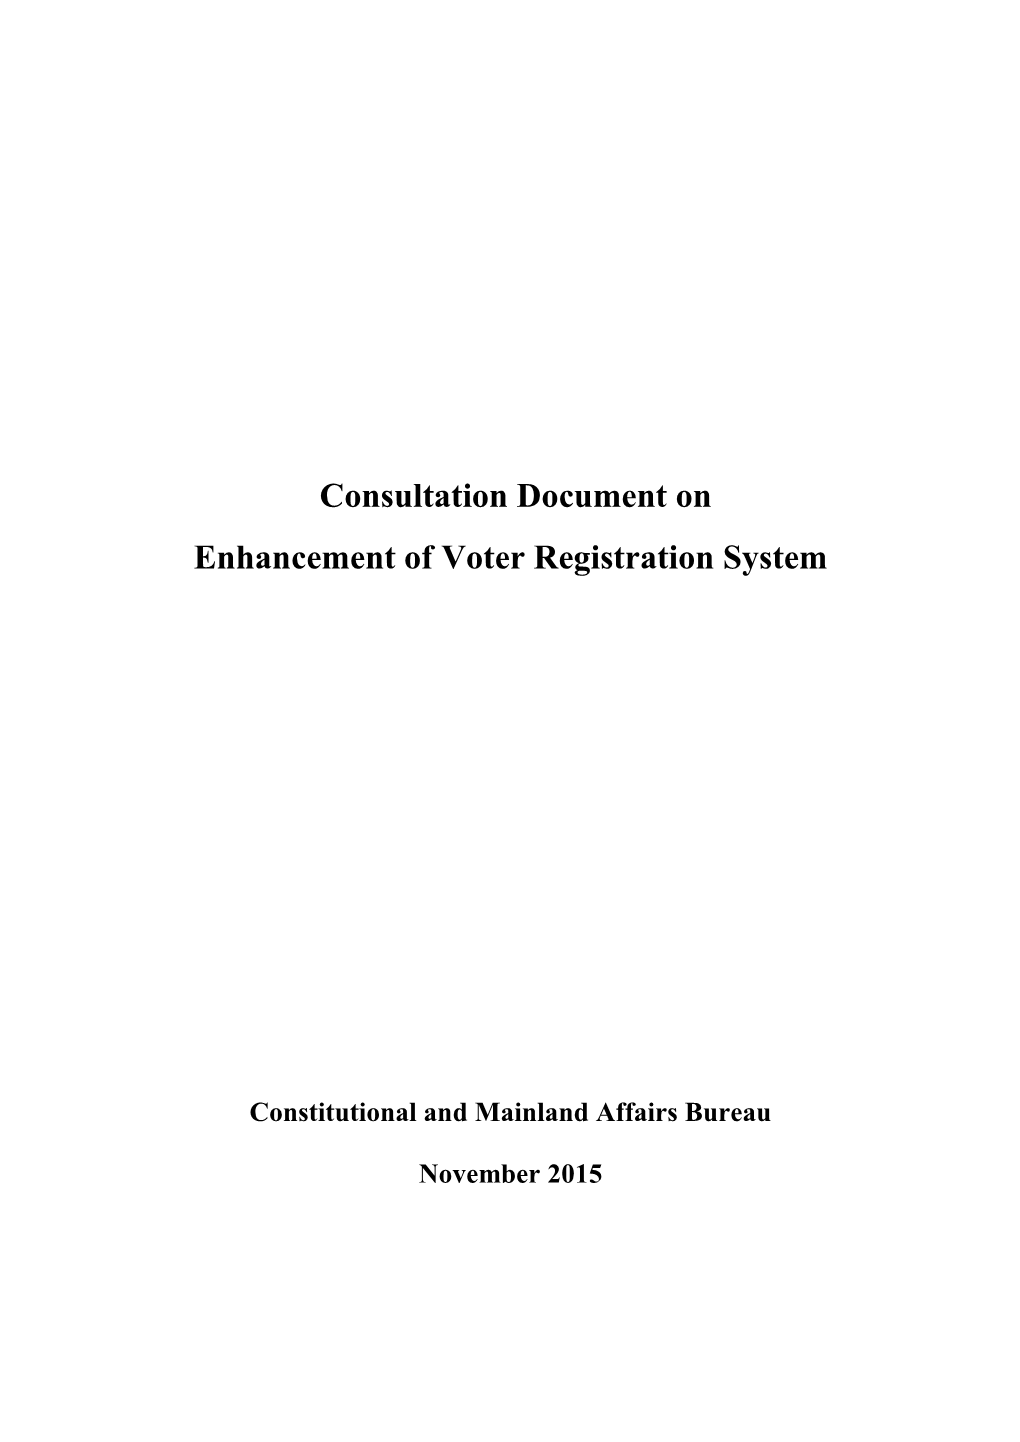 Consultation Document on Enhancement of Voter Registration System